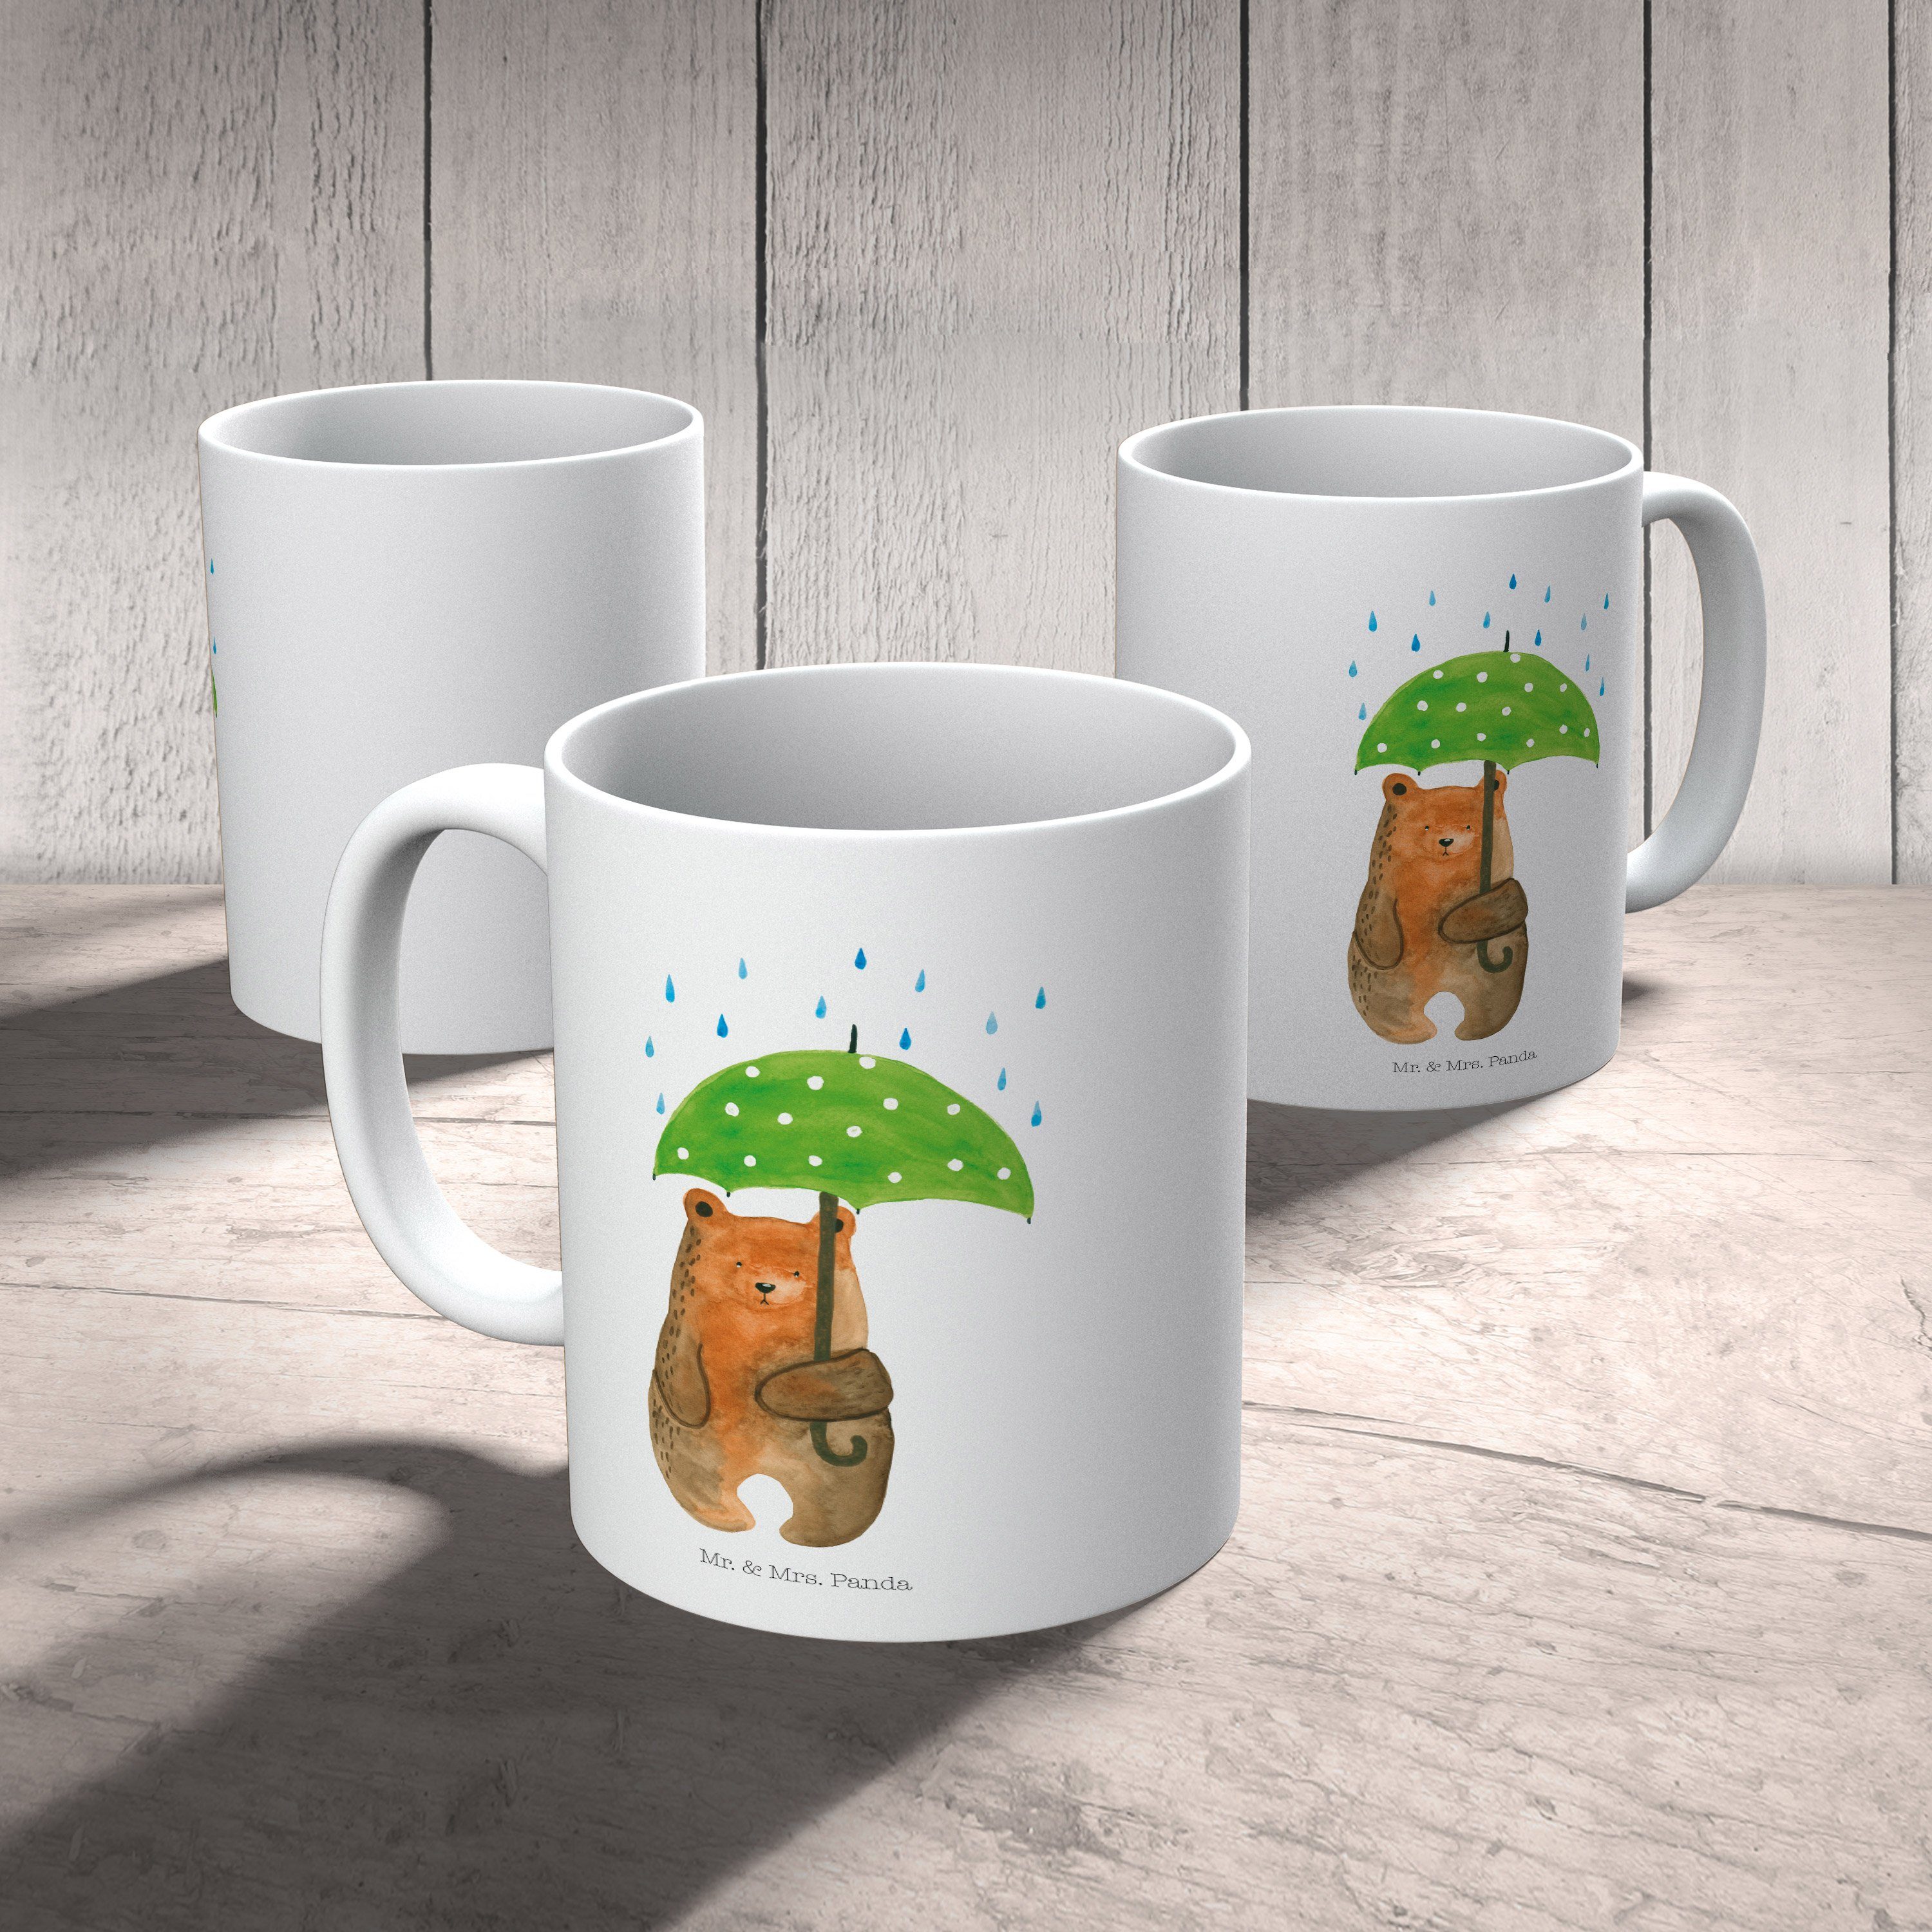 Büro Panda Bär Freunde, Geschenk, - & Tas, Mr. Kaffeetasse, Mrs. Regenschirm Tasse Keramik - Weiß mit